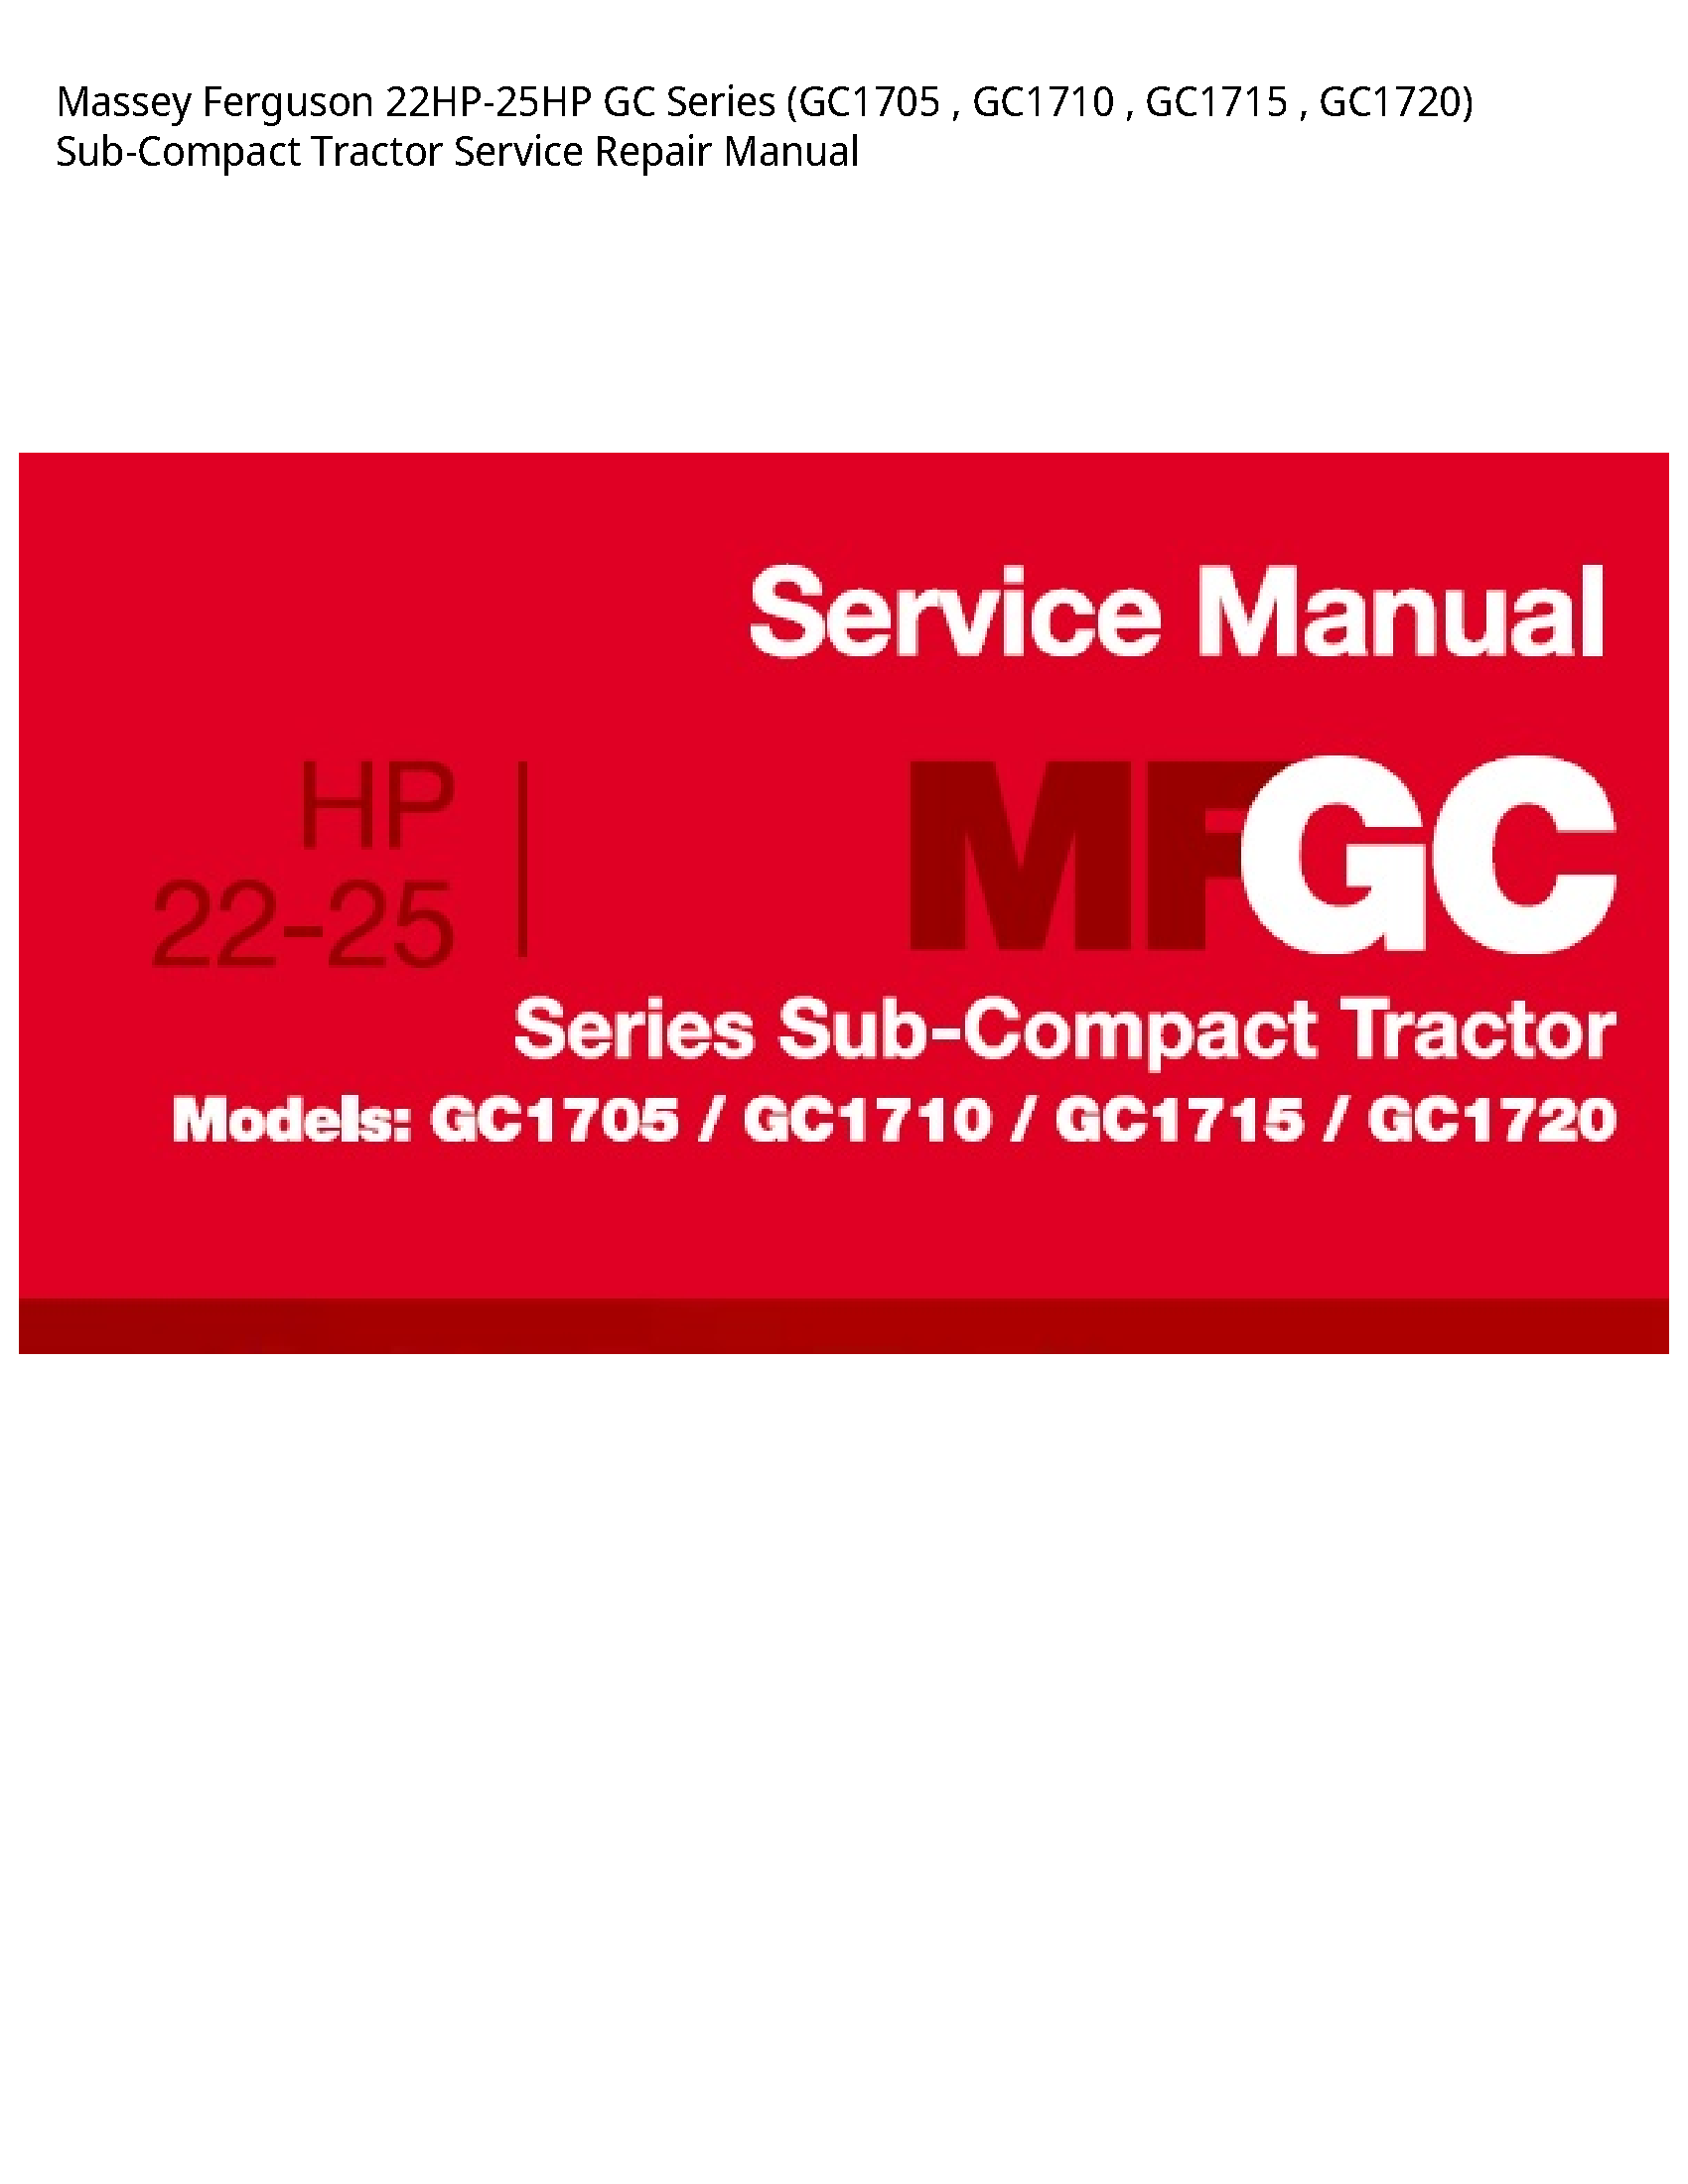 Massey Ferguson 22HP-25HP GC Series Sub-Compact Tractor manual